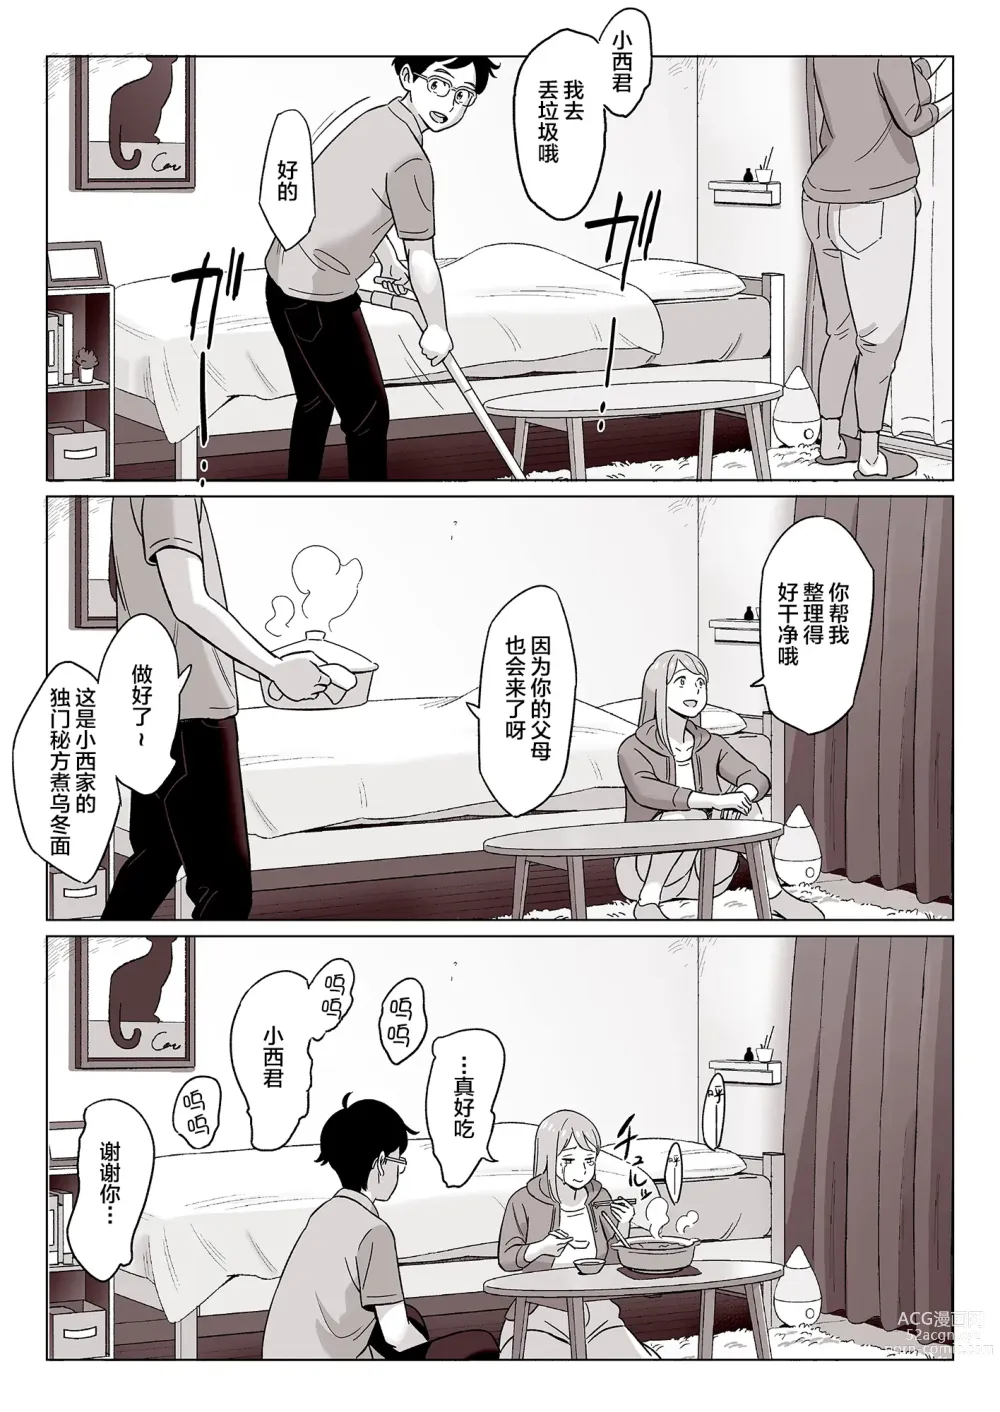 Page 267 of manga Muchi Niku Heaven de Pan Pan Pan